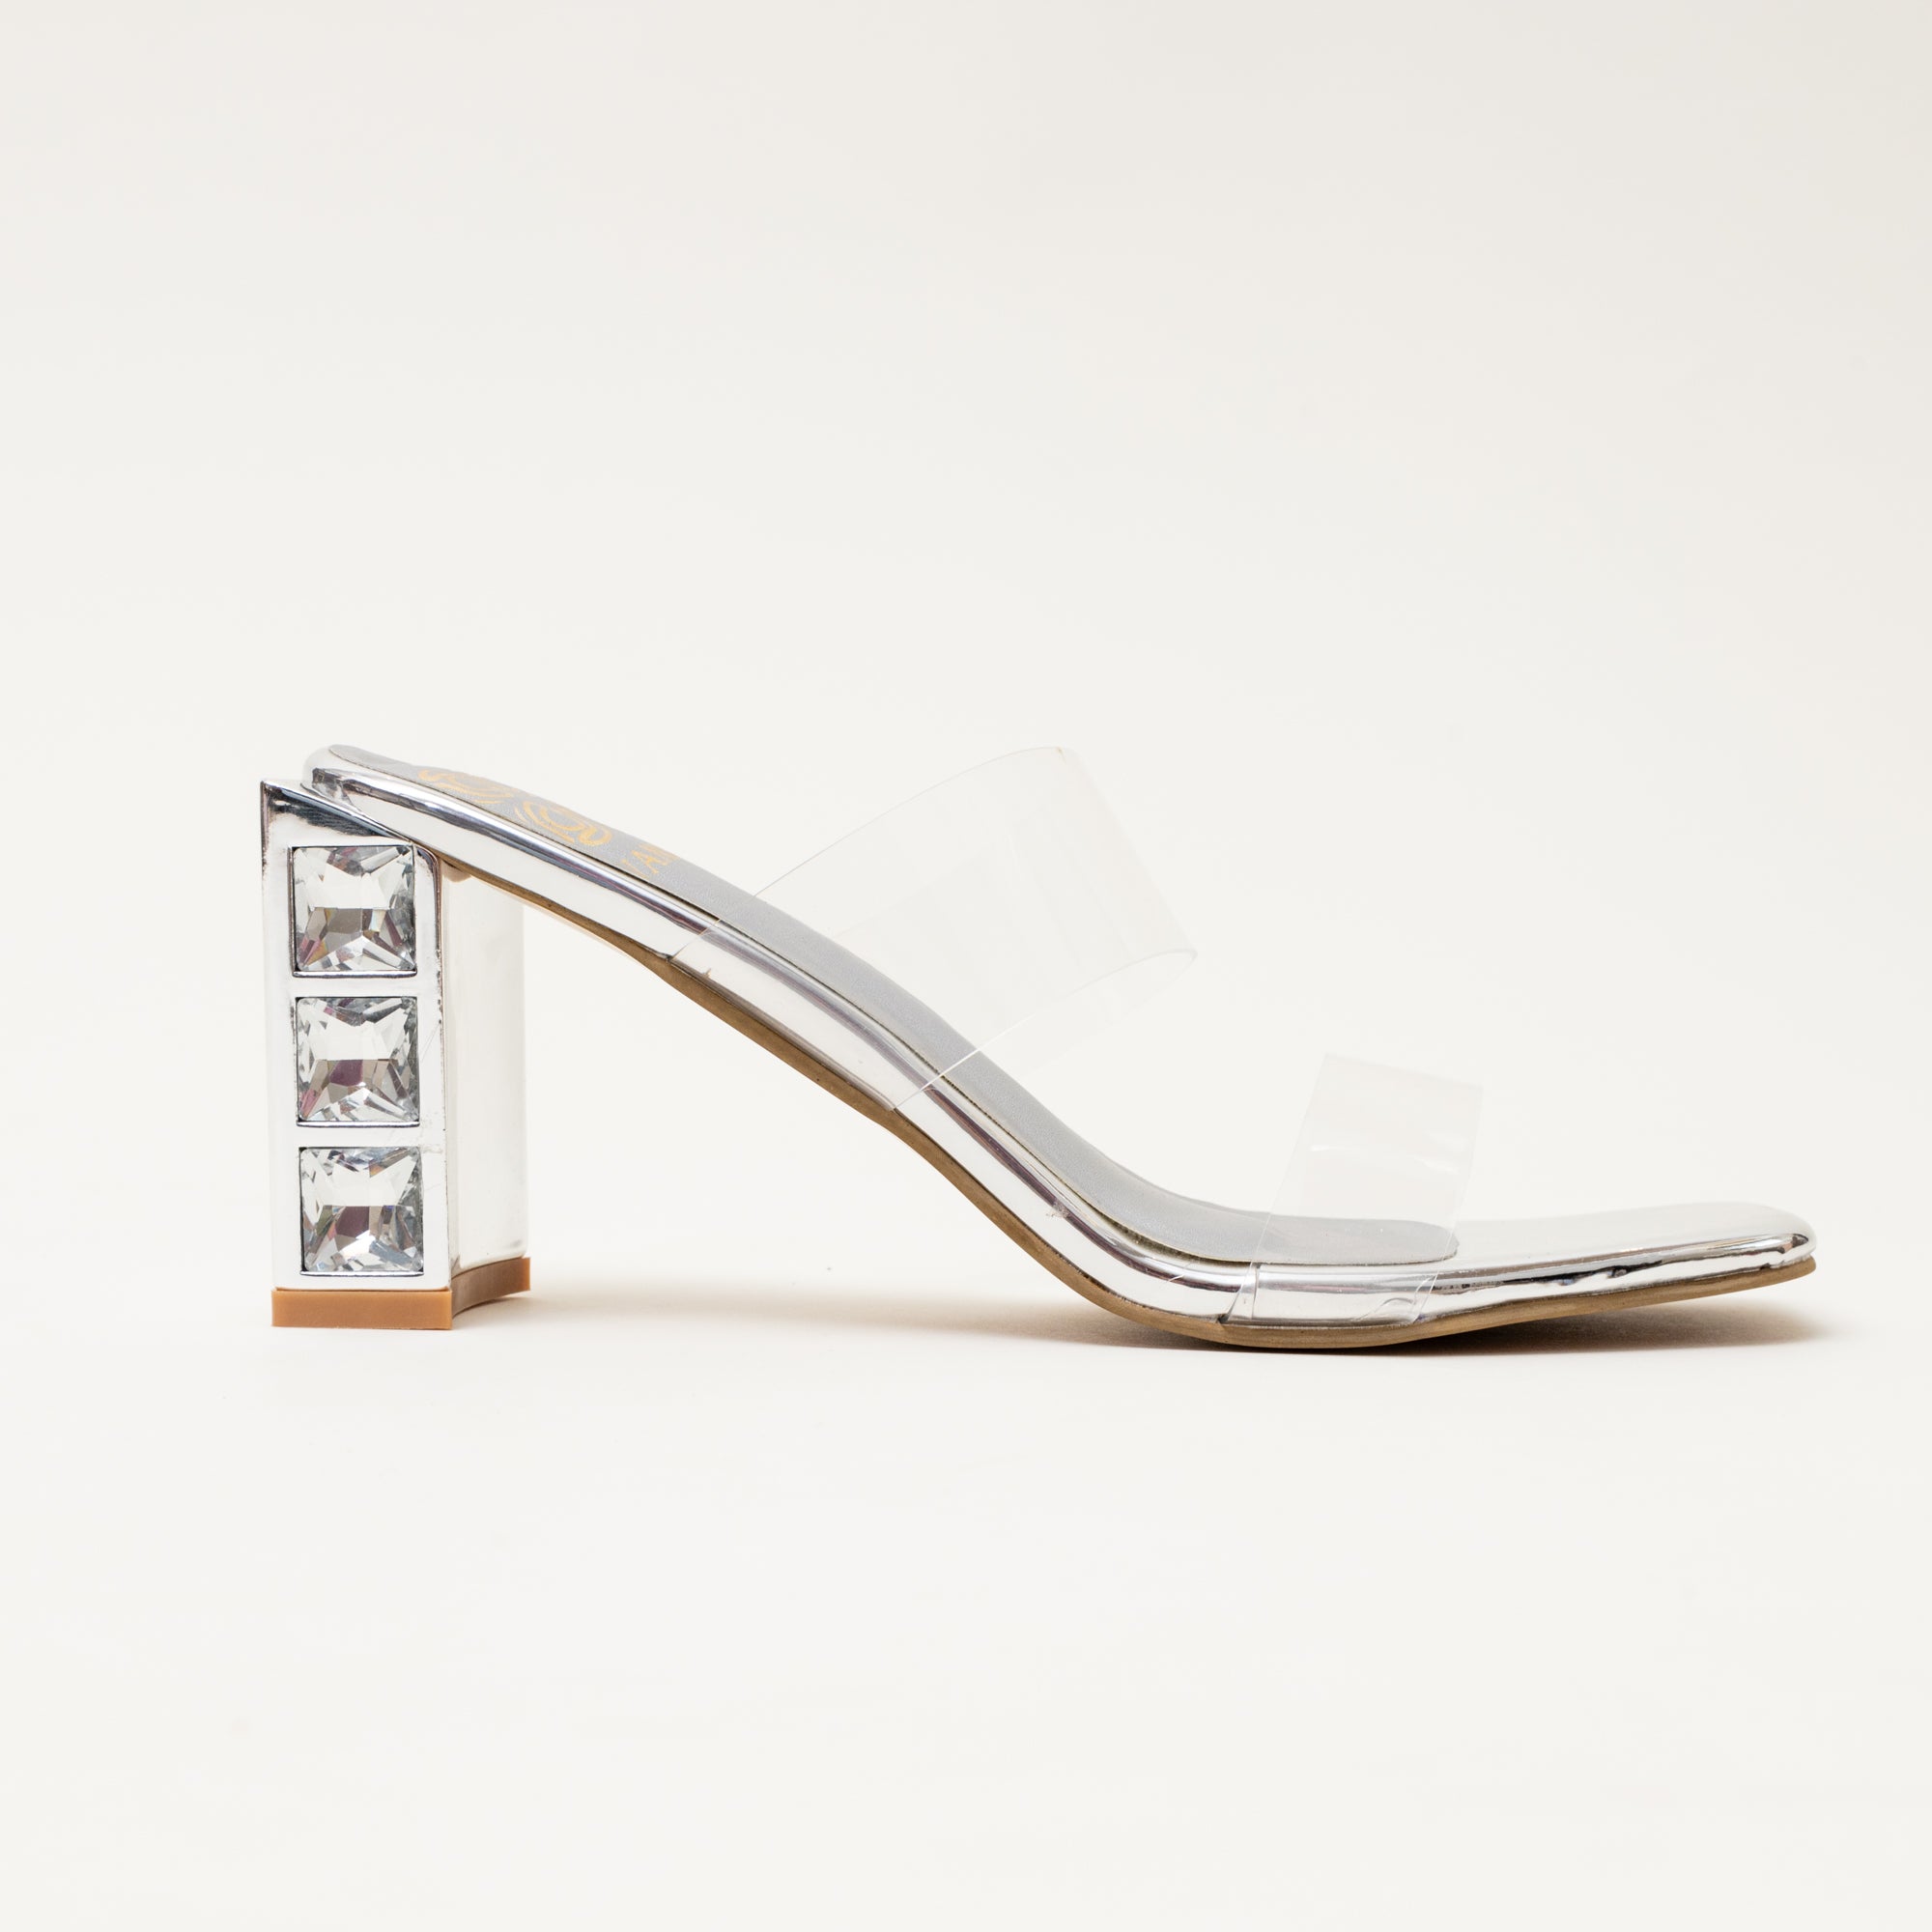 QUICKSILVER-Embellished Block Heel in-Silver.